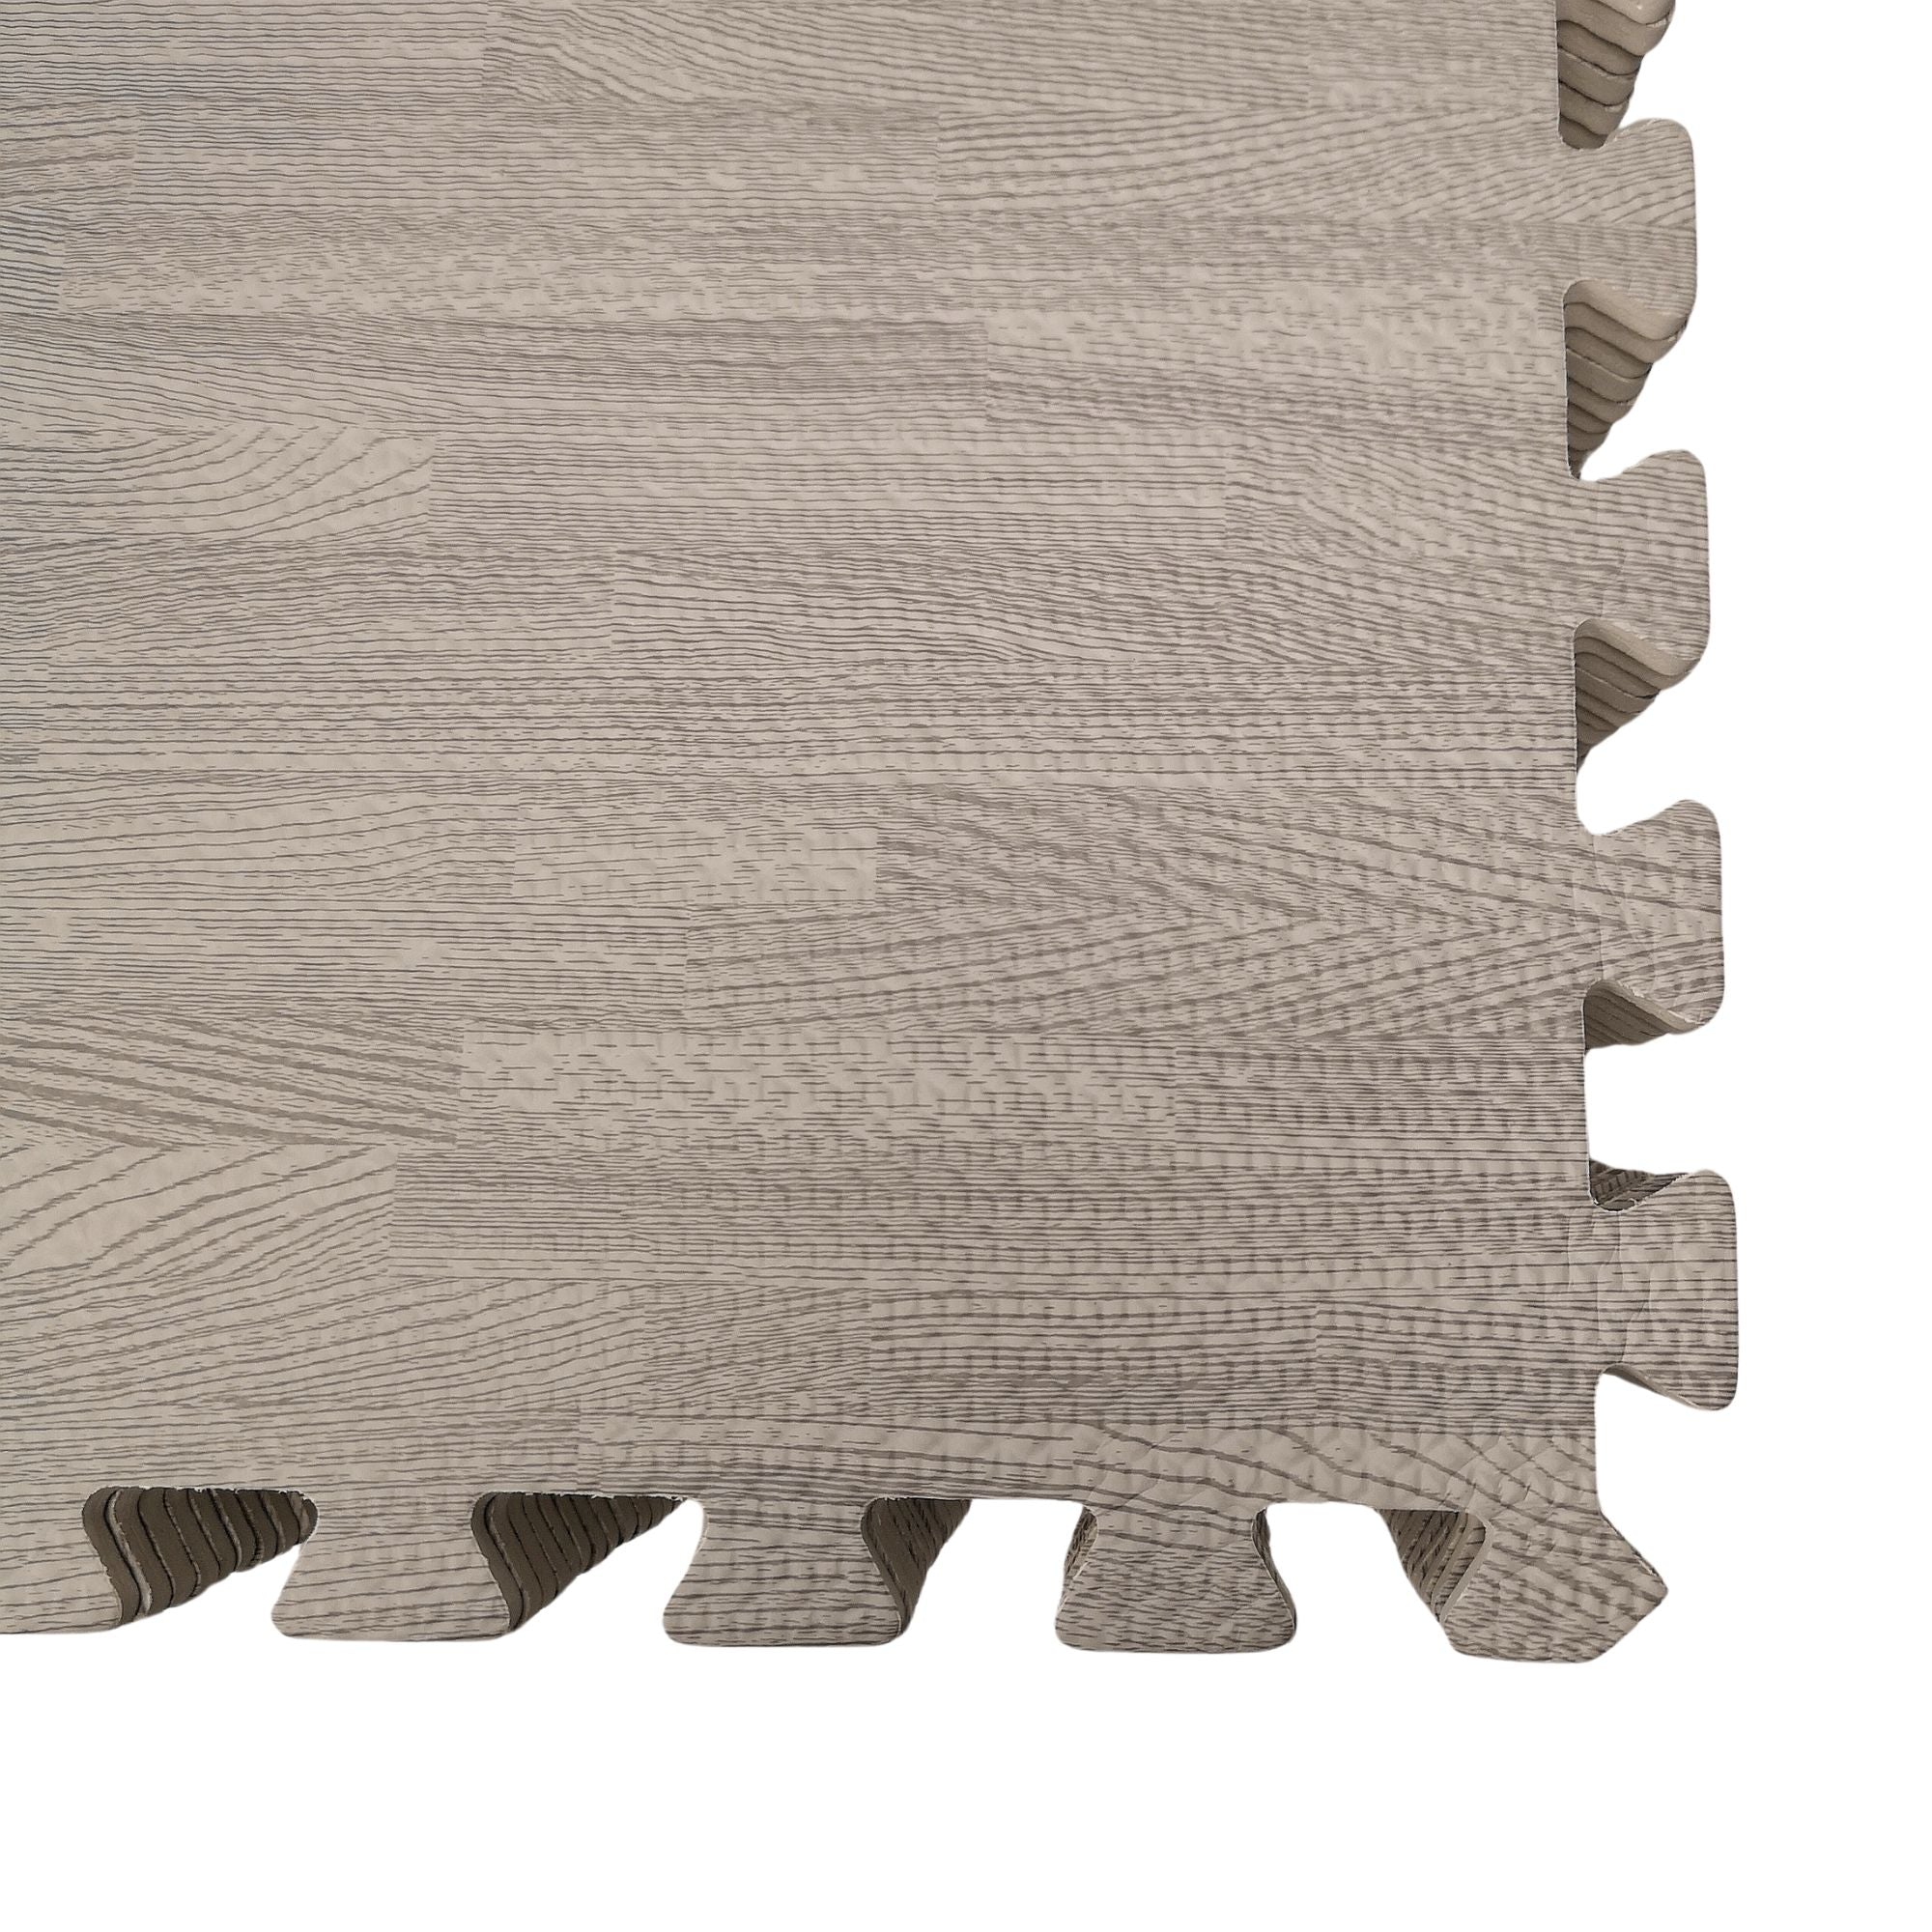 4 Piece Grey Wood Effect EVA Foam Floor Protective Floor Tiles / Mats 60x60cm Each Set For Gyms, Kitchens, Garages, Camping, Kids Play Matting, Flooring Mats Set Covers 1.44 sqm (15.5 sq ft)